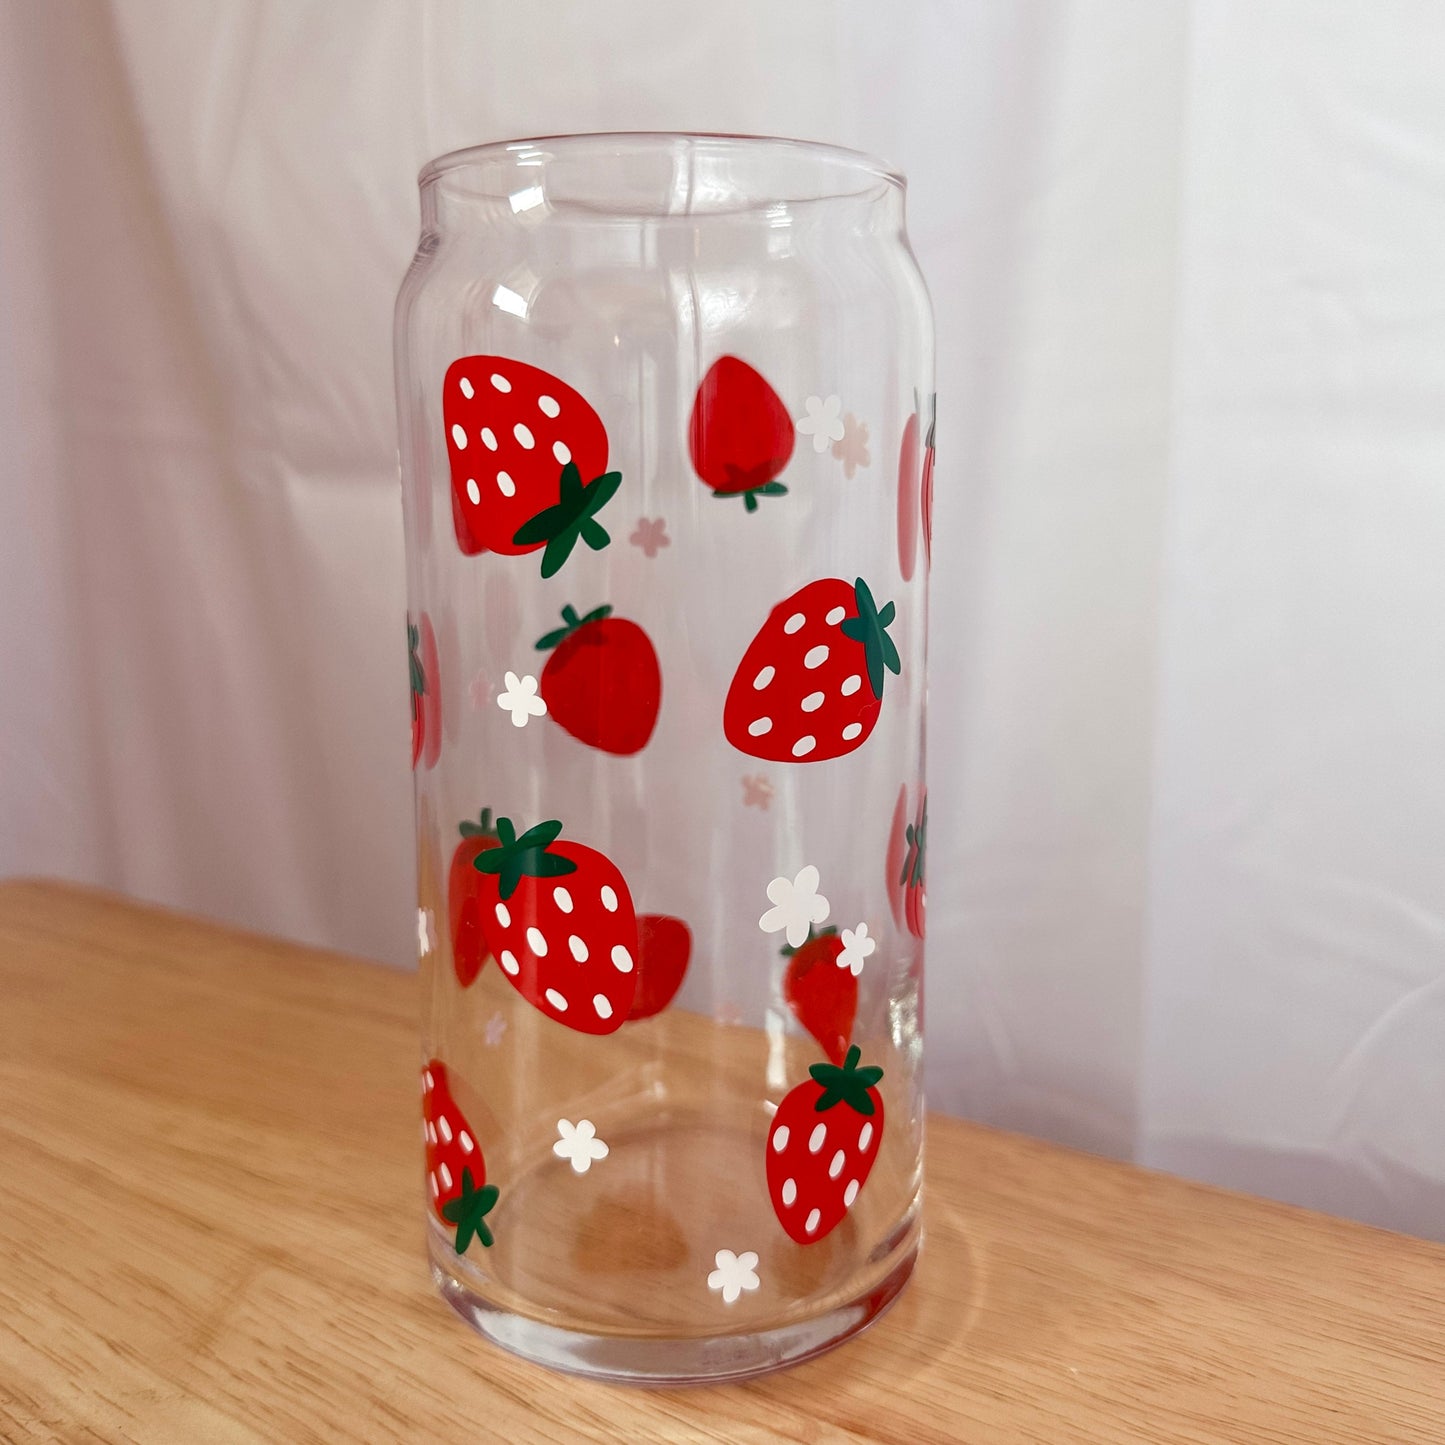 Nana's Strawberry Glass Cup